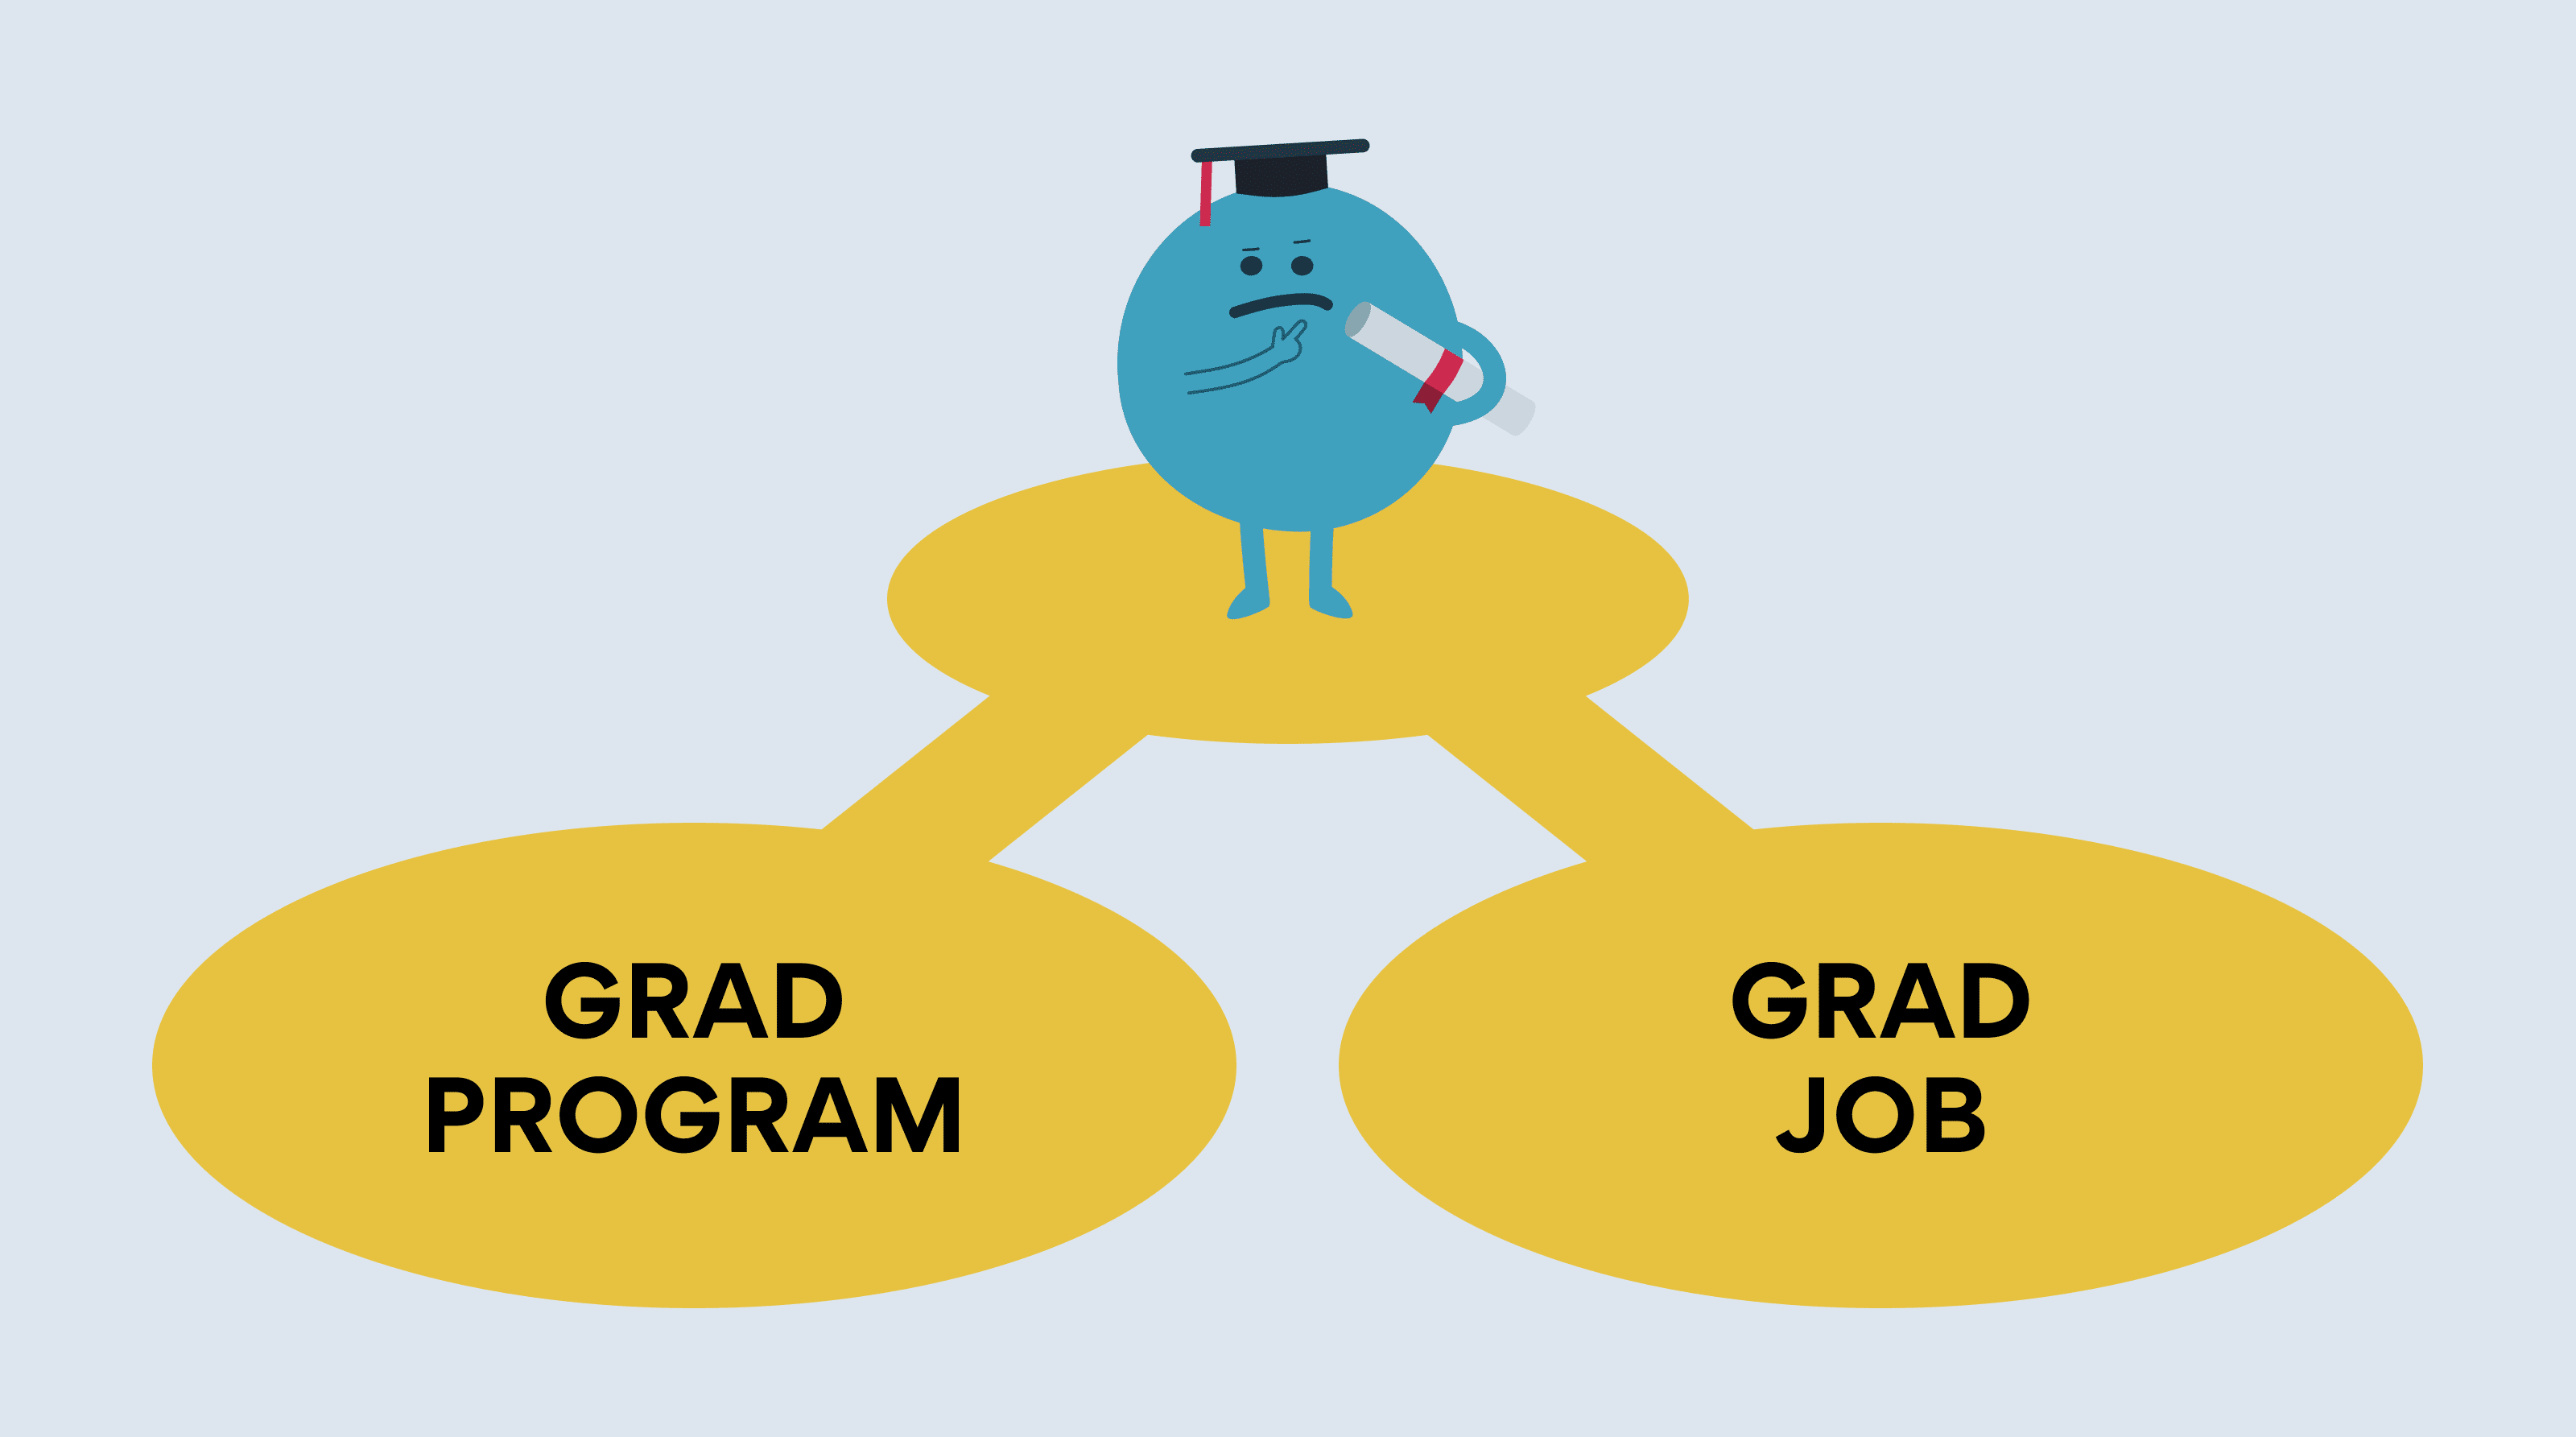 Graduate Programs Vs Graduate Jobs image